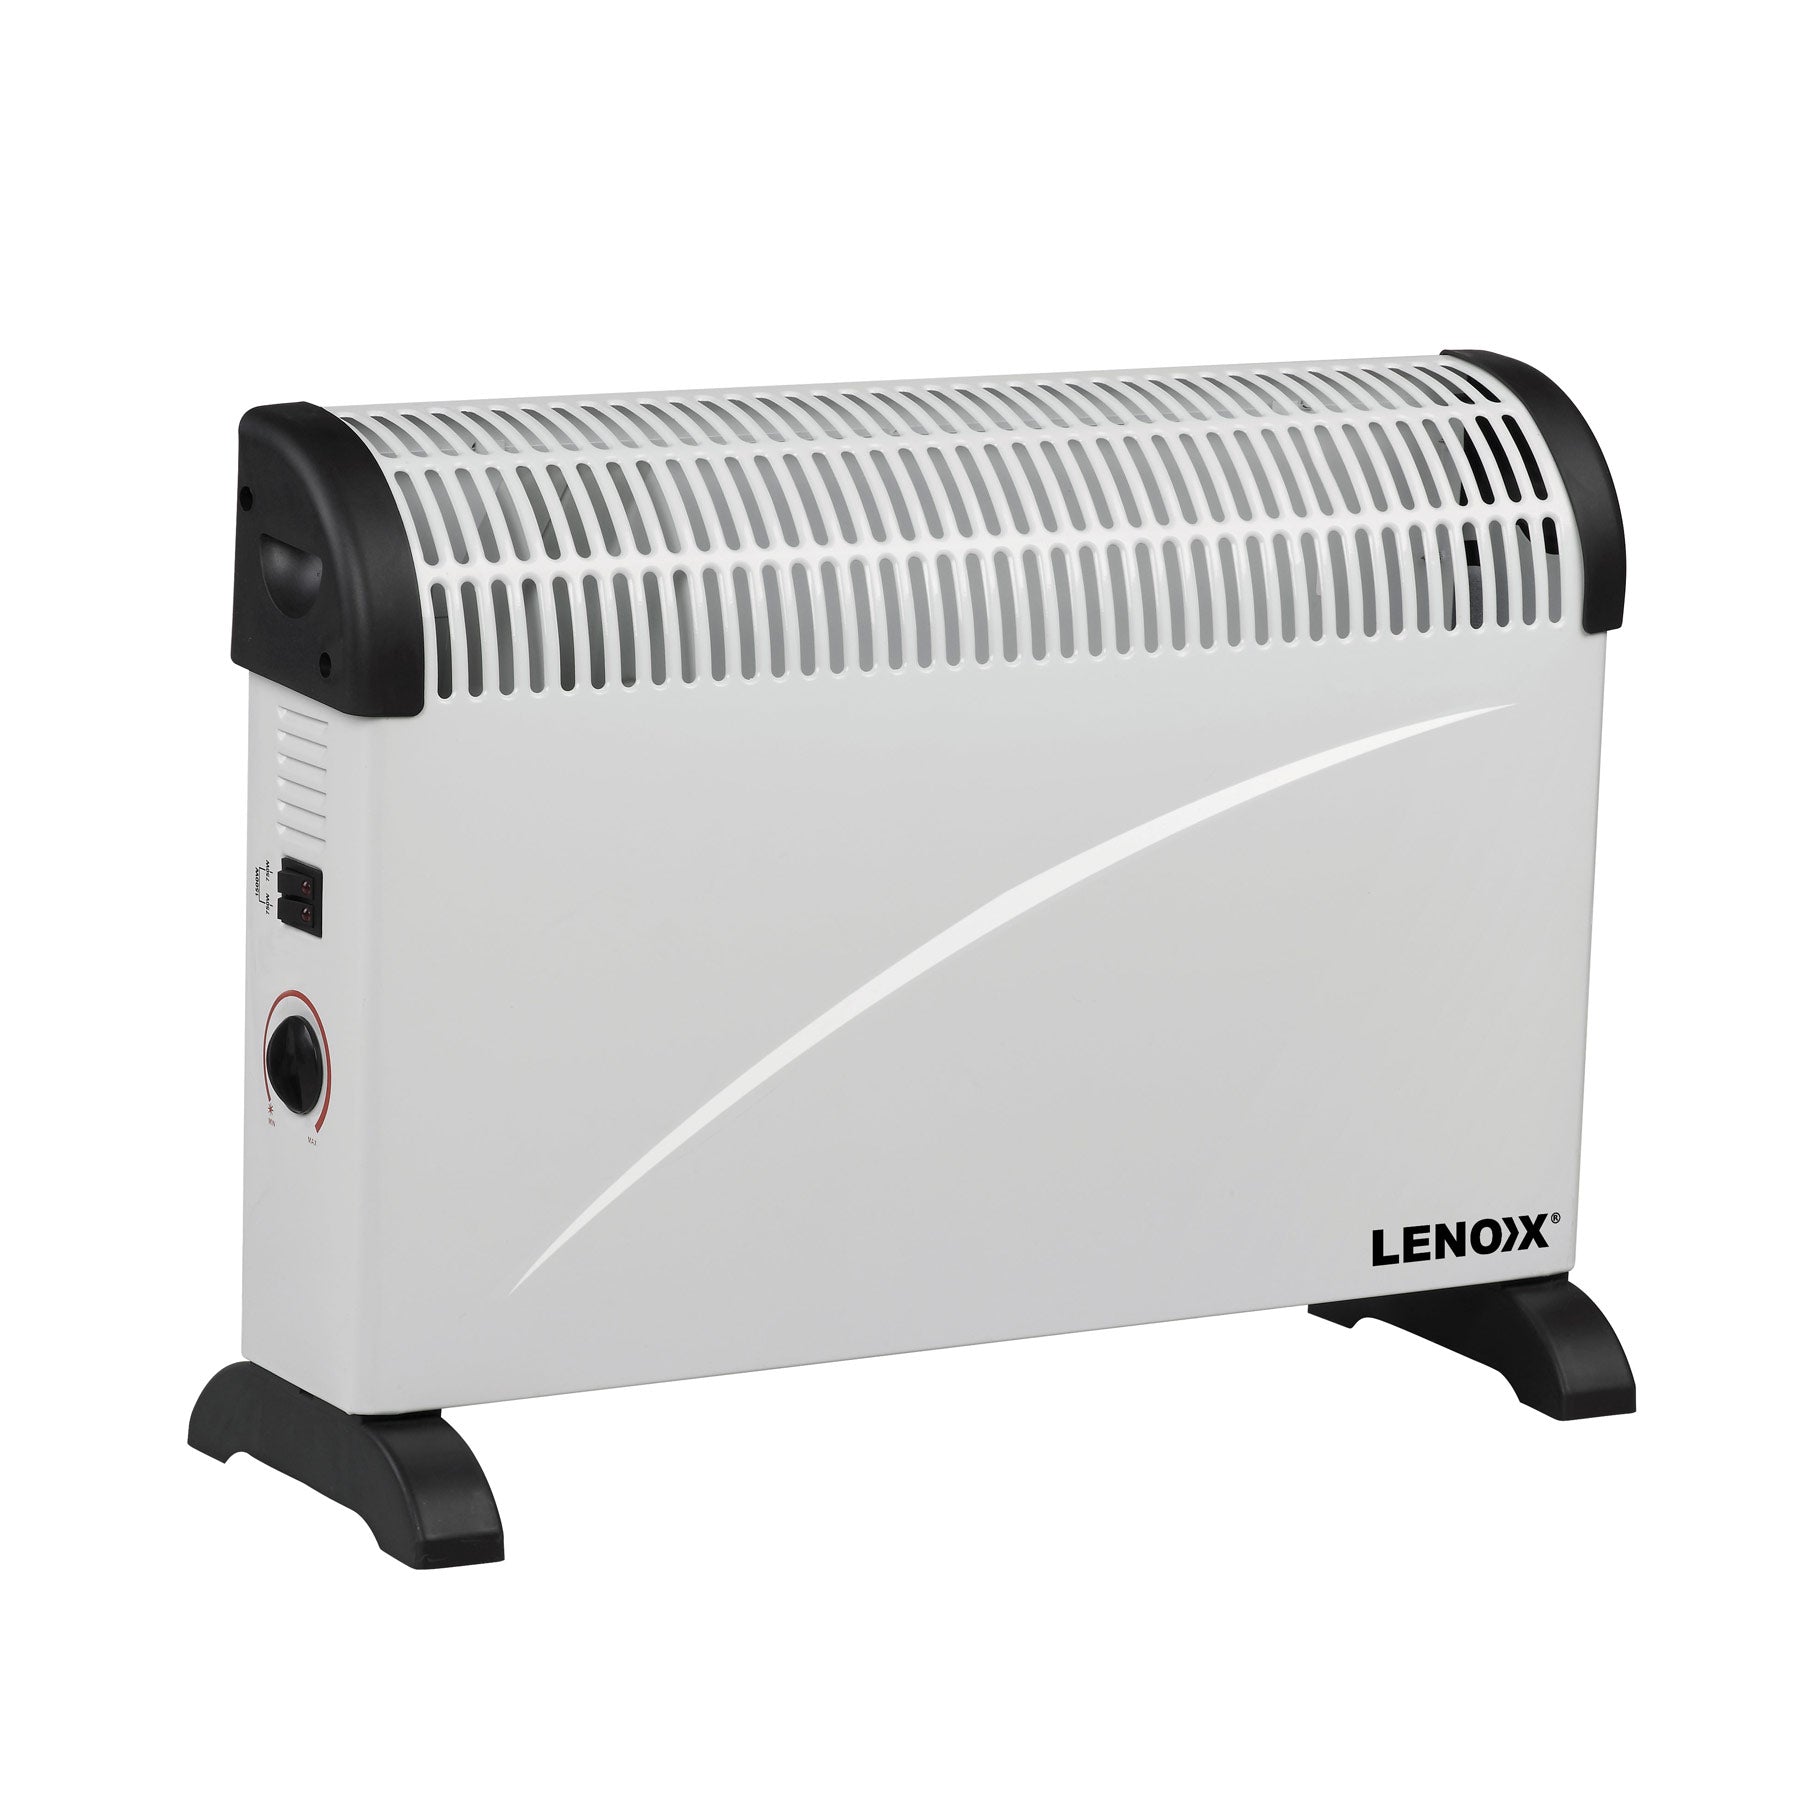 Portable Convector Heater 2000W, 3 Heat Settings – Lenoxx Electronics